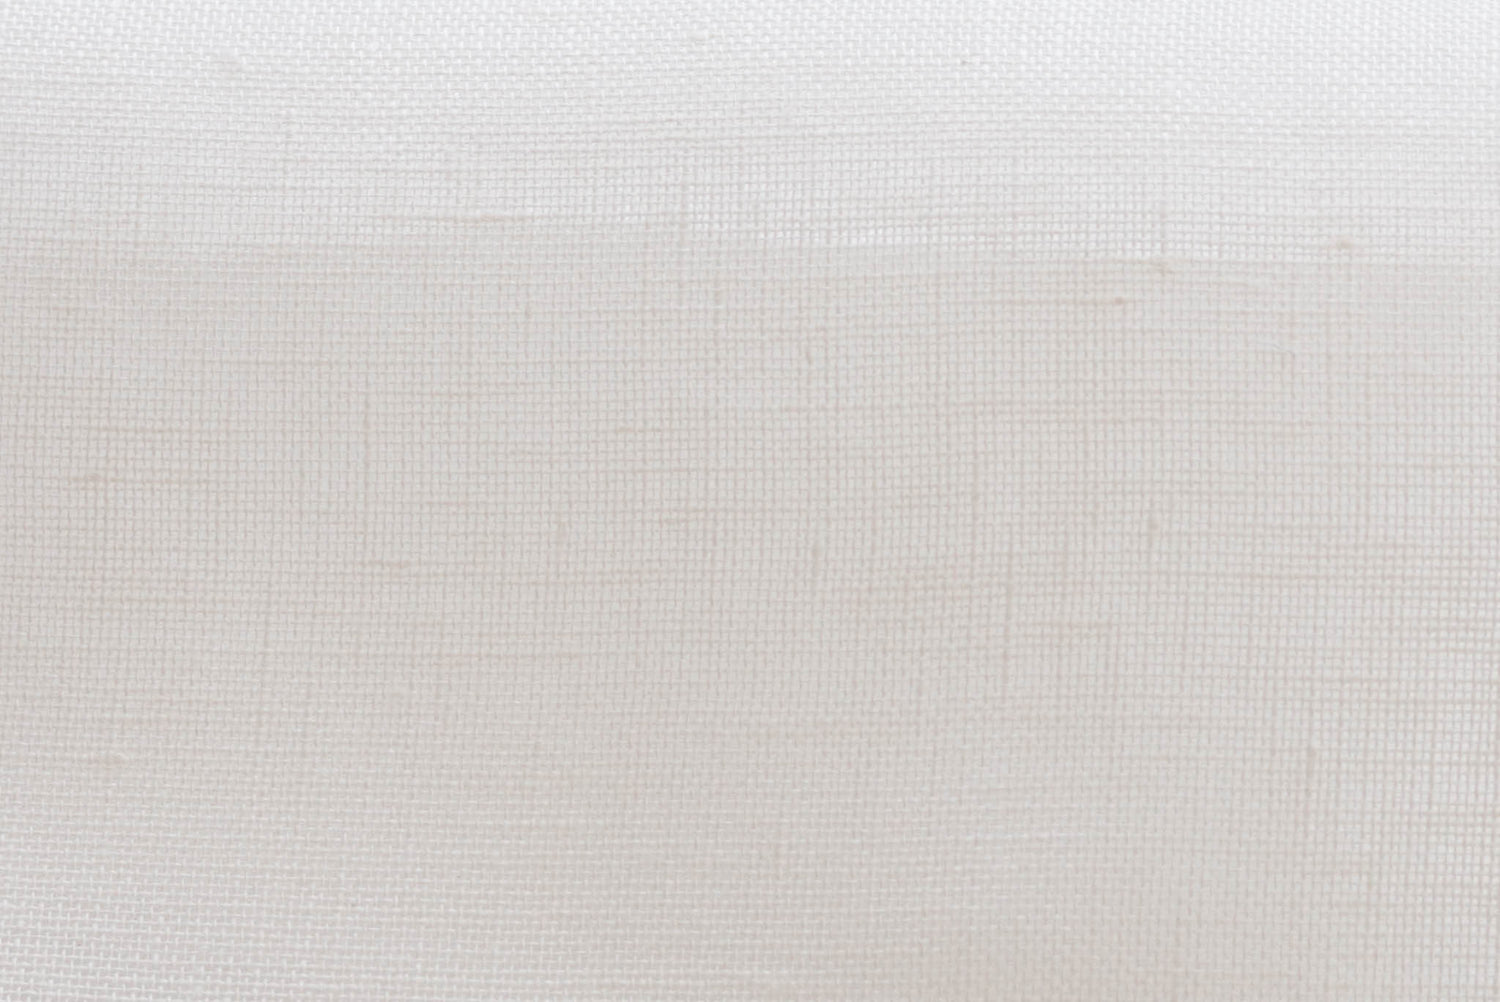 ANTWERP - 100% Belgian Linen Sheer Curtains - OysterAntwerp collection, featuring 100% Belgian linen, woven in one of the six Belgium Linen factory in Belgium with 150 years of linen weaving history.Material: 100% BelDecorPassionsANTWERP - 100% Belgian Linen Sheer Curtains - Oyster